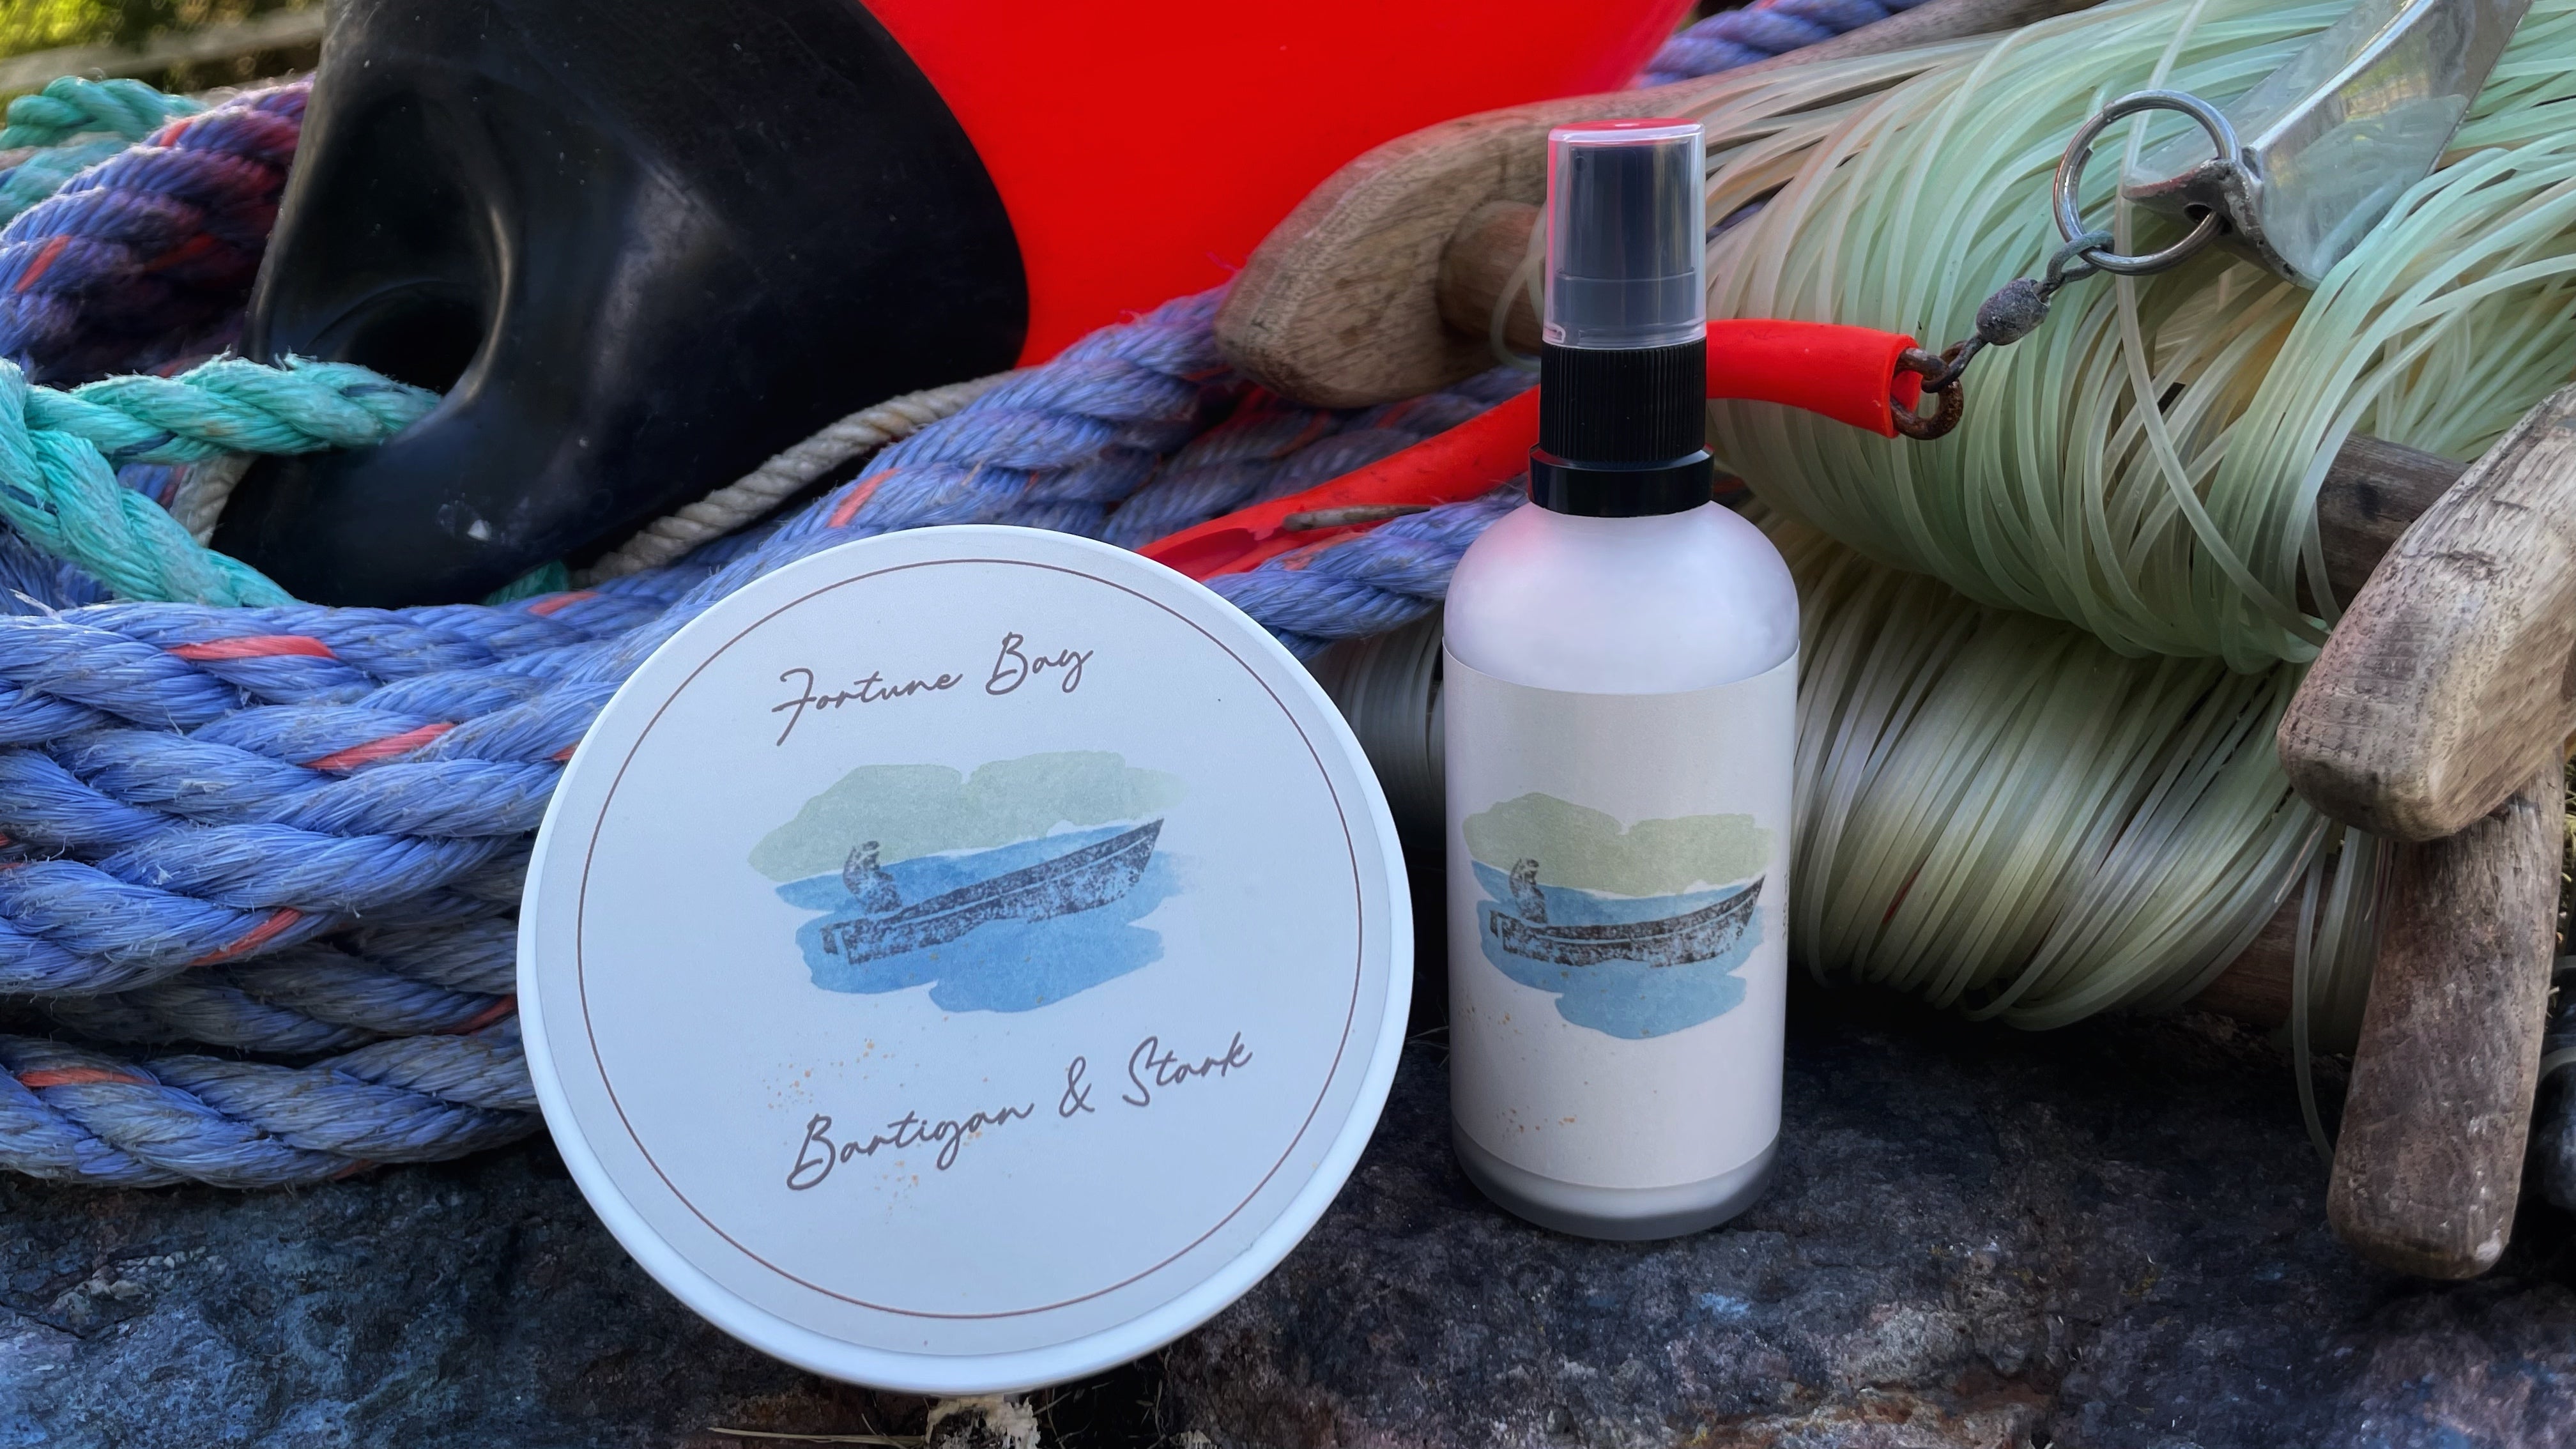 Fortune Bay Shaving Soap - Bartigan & Stark